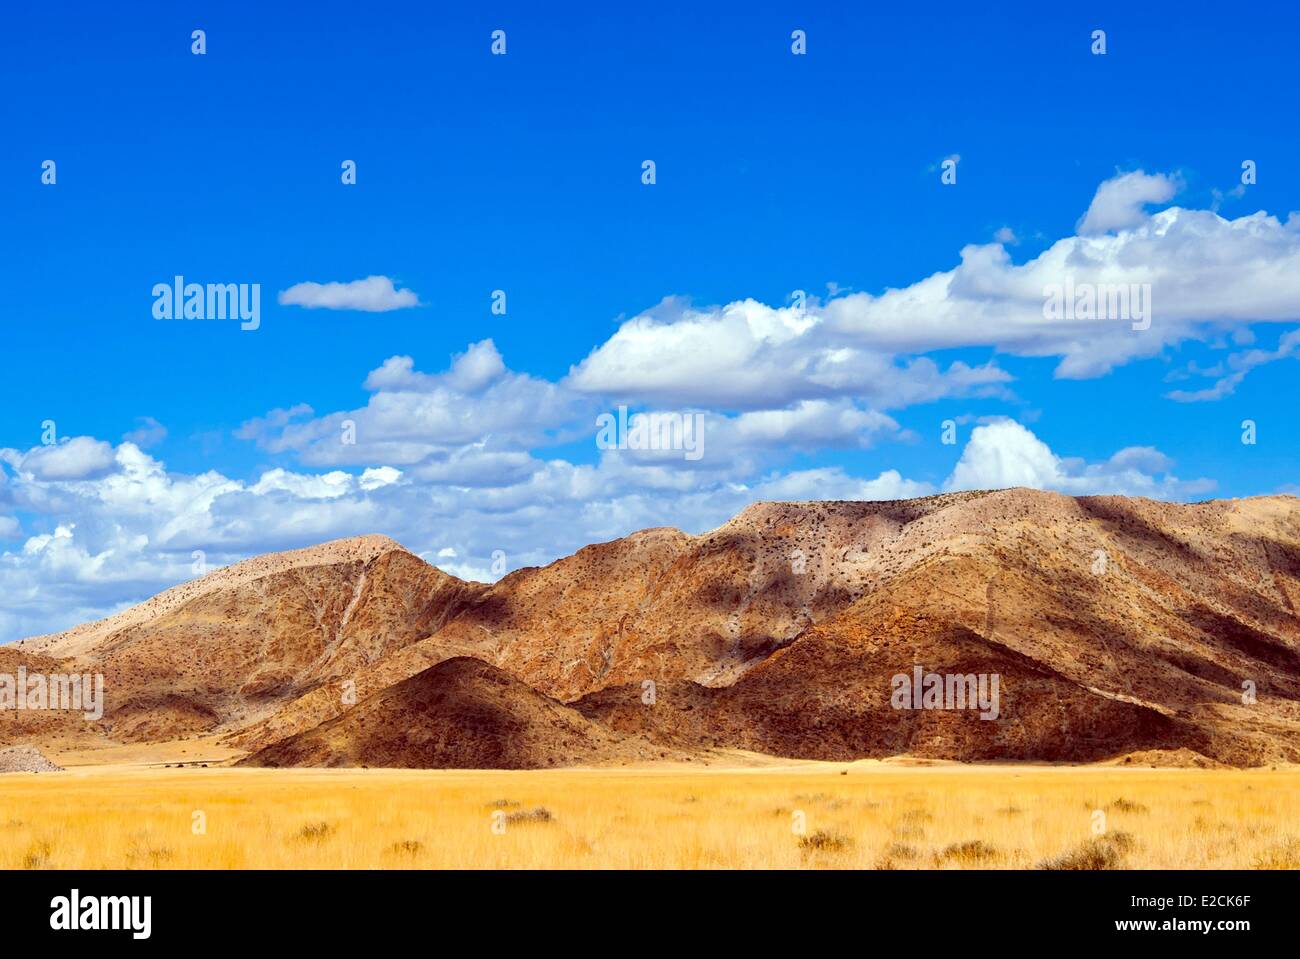 Namibia, Hardap region, Namib desert Stock Photo